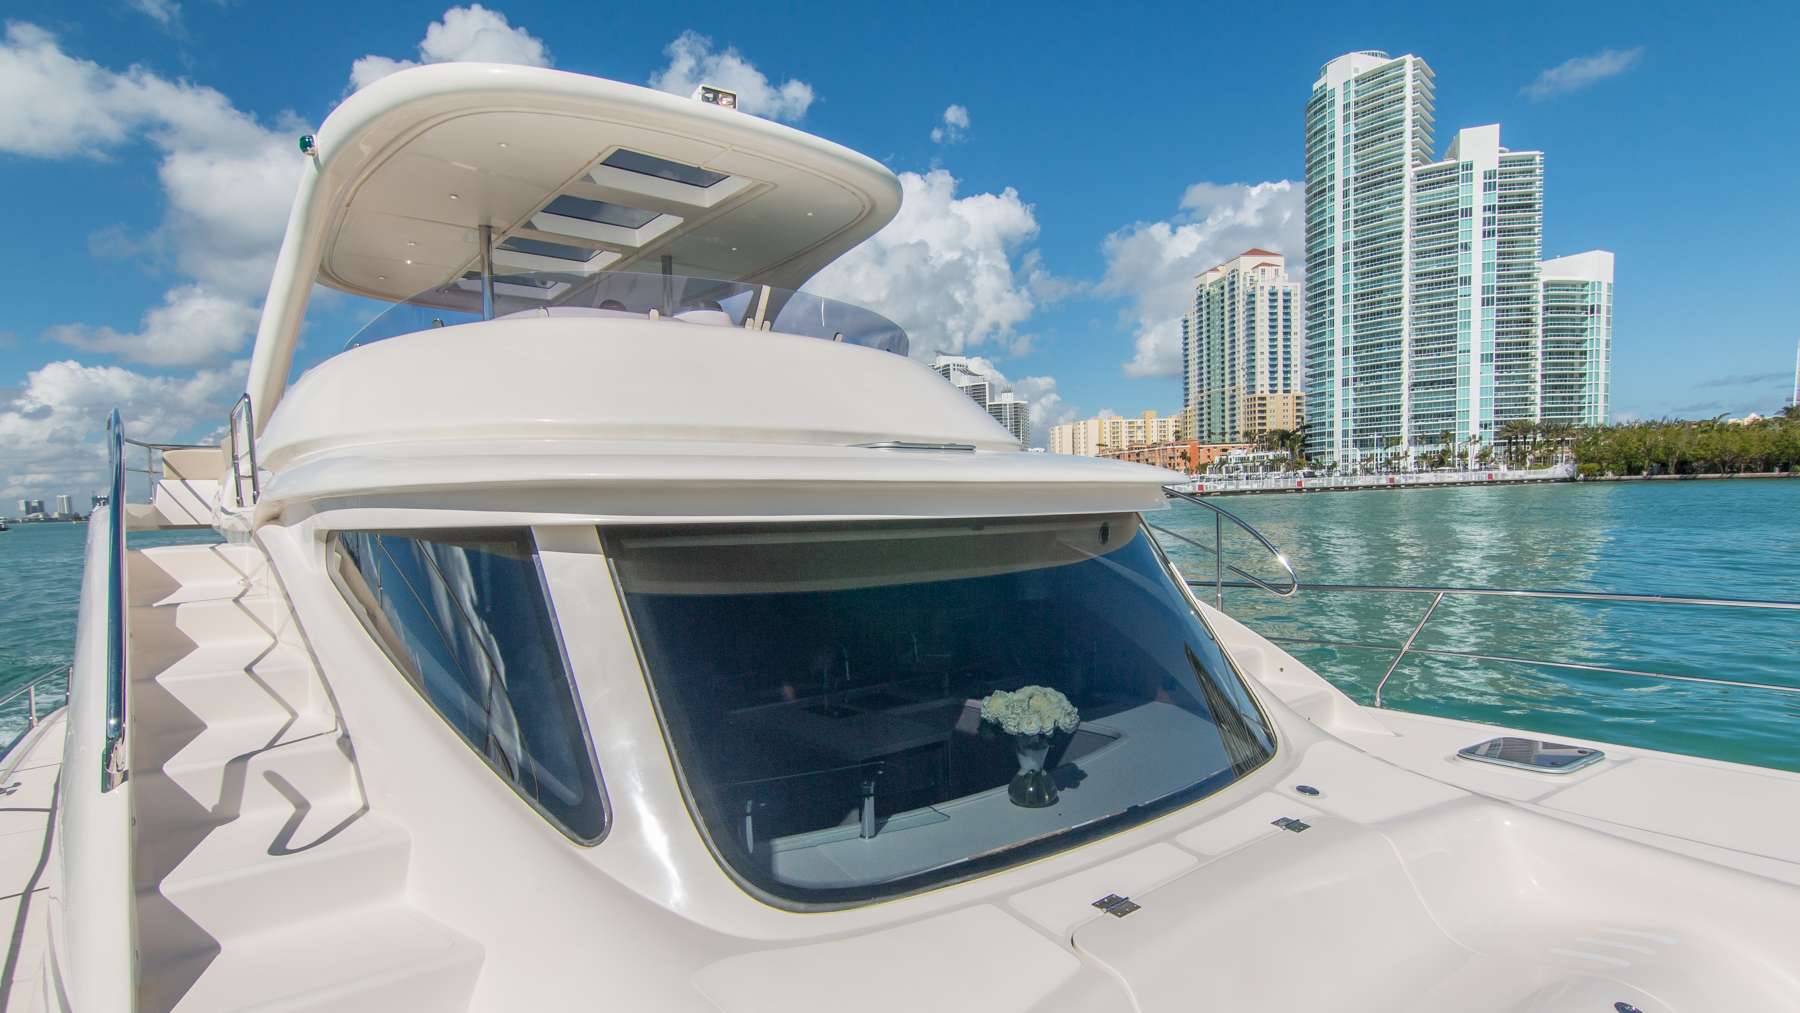 legend &amp; soul - Catamaran Charter USA & Boat hire in Florida & Bahamas 5